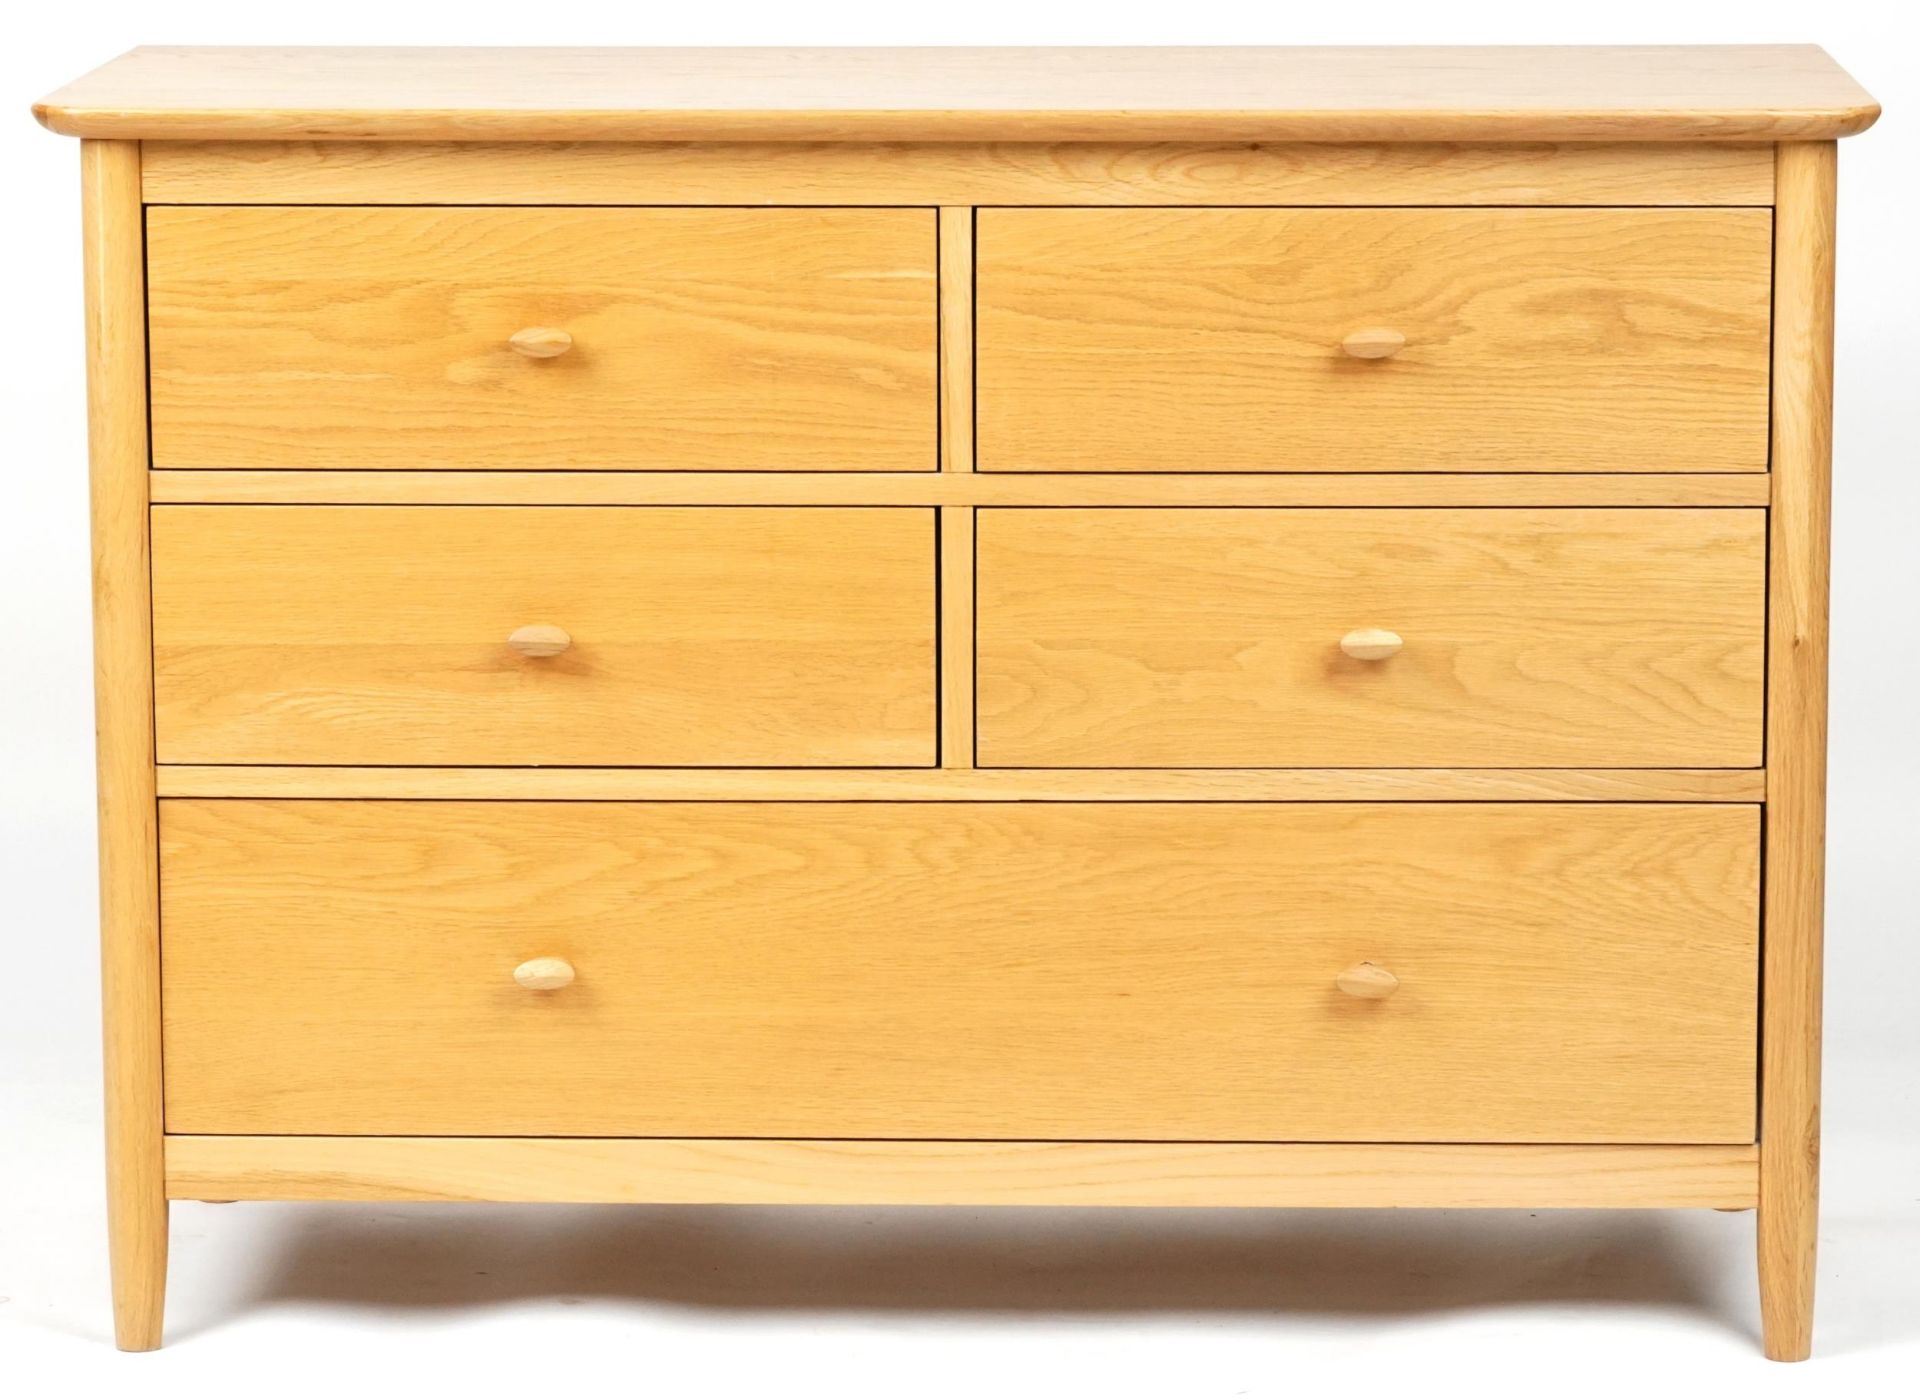 Ercol Teramo contemporary light oak five drawer chest, 79cm H x 114cm W x 47cm D - Image 2 of 6